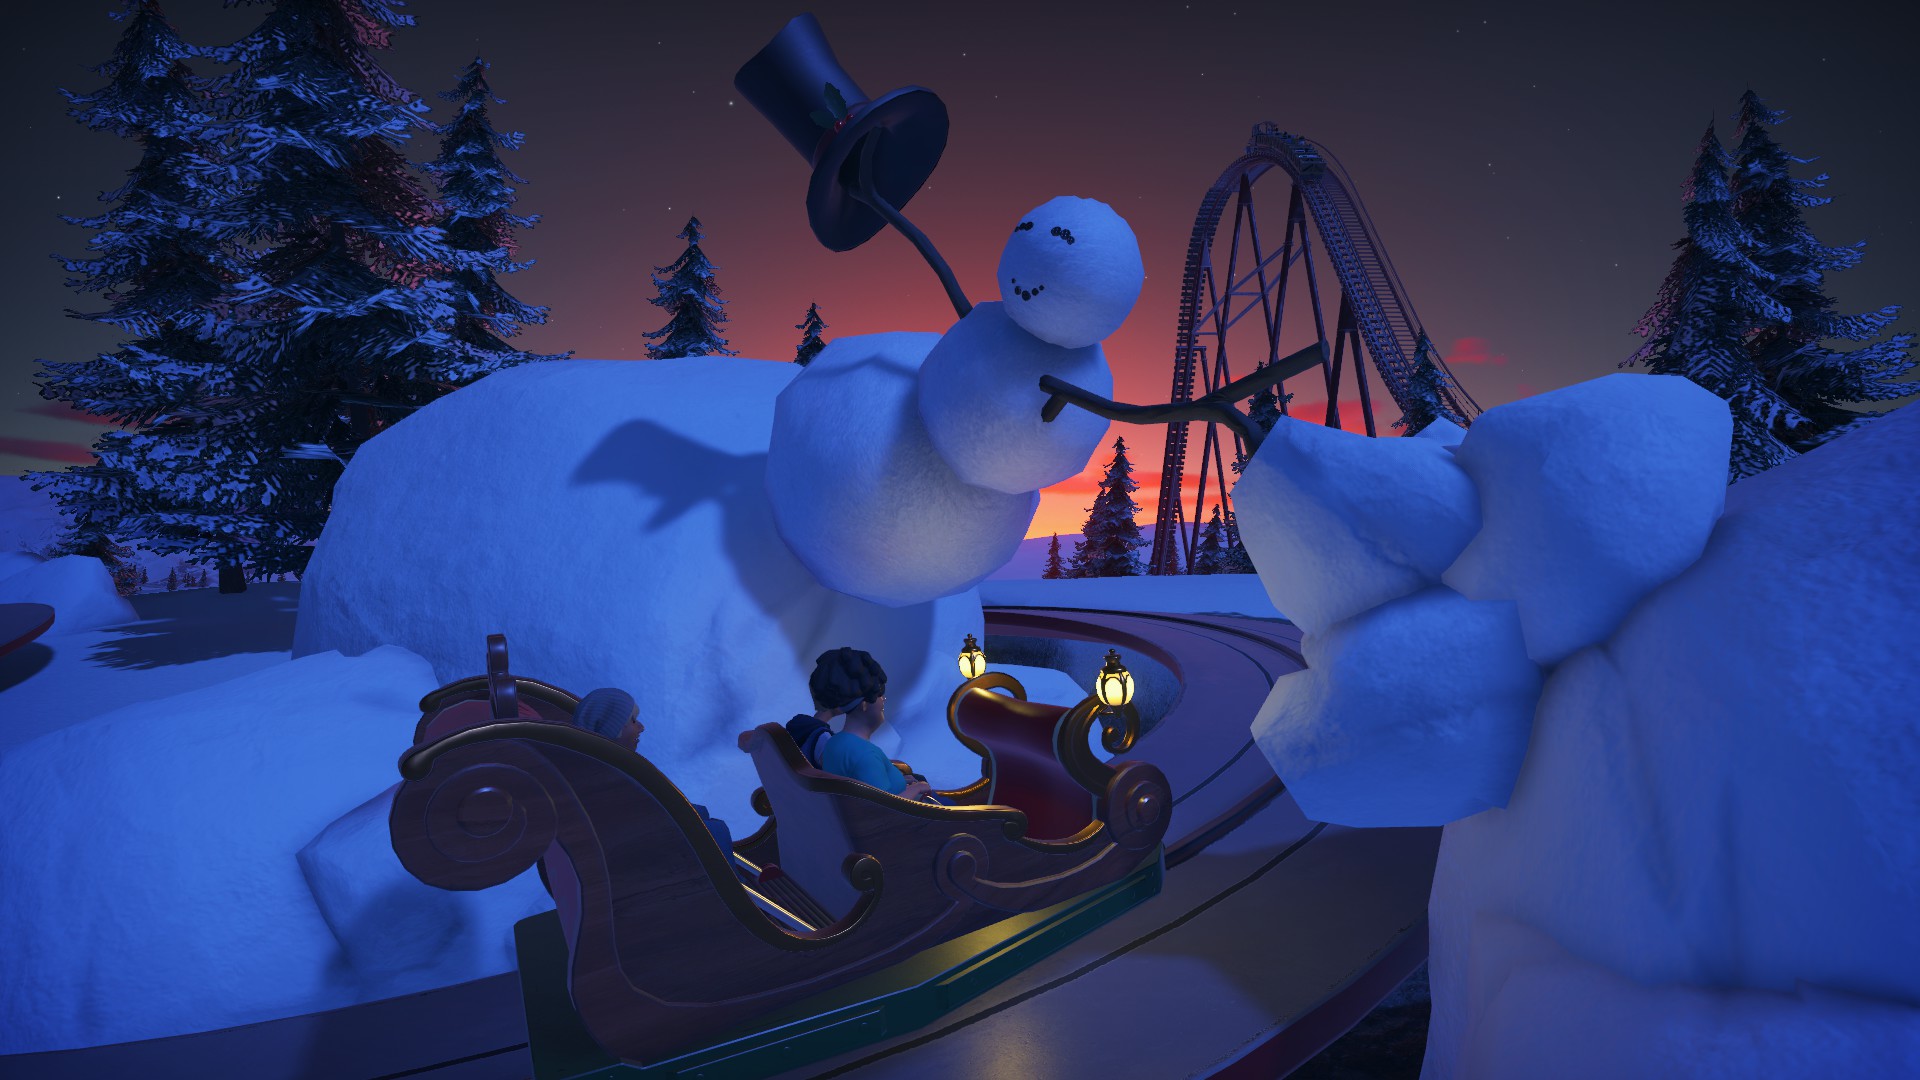 A smiling snowman over a sleigh ride